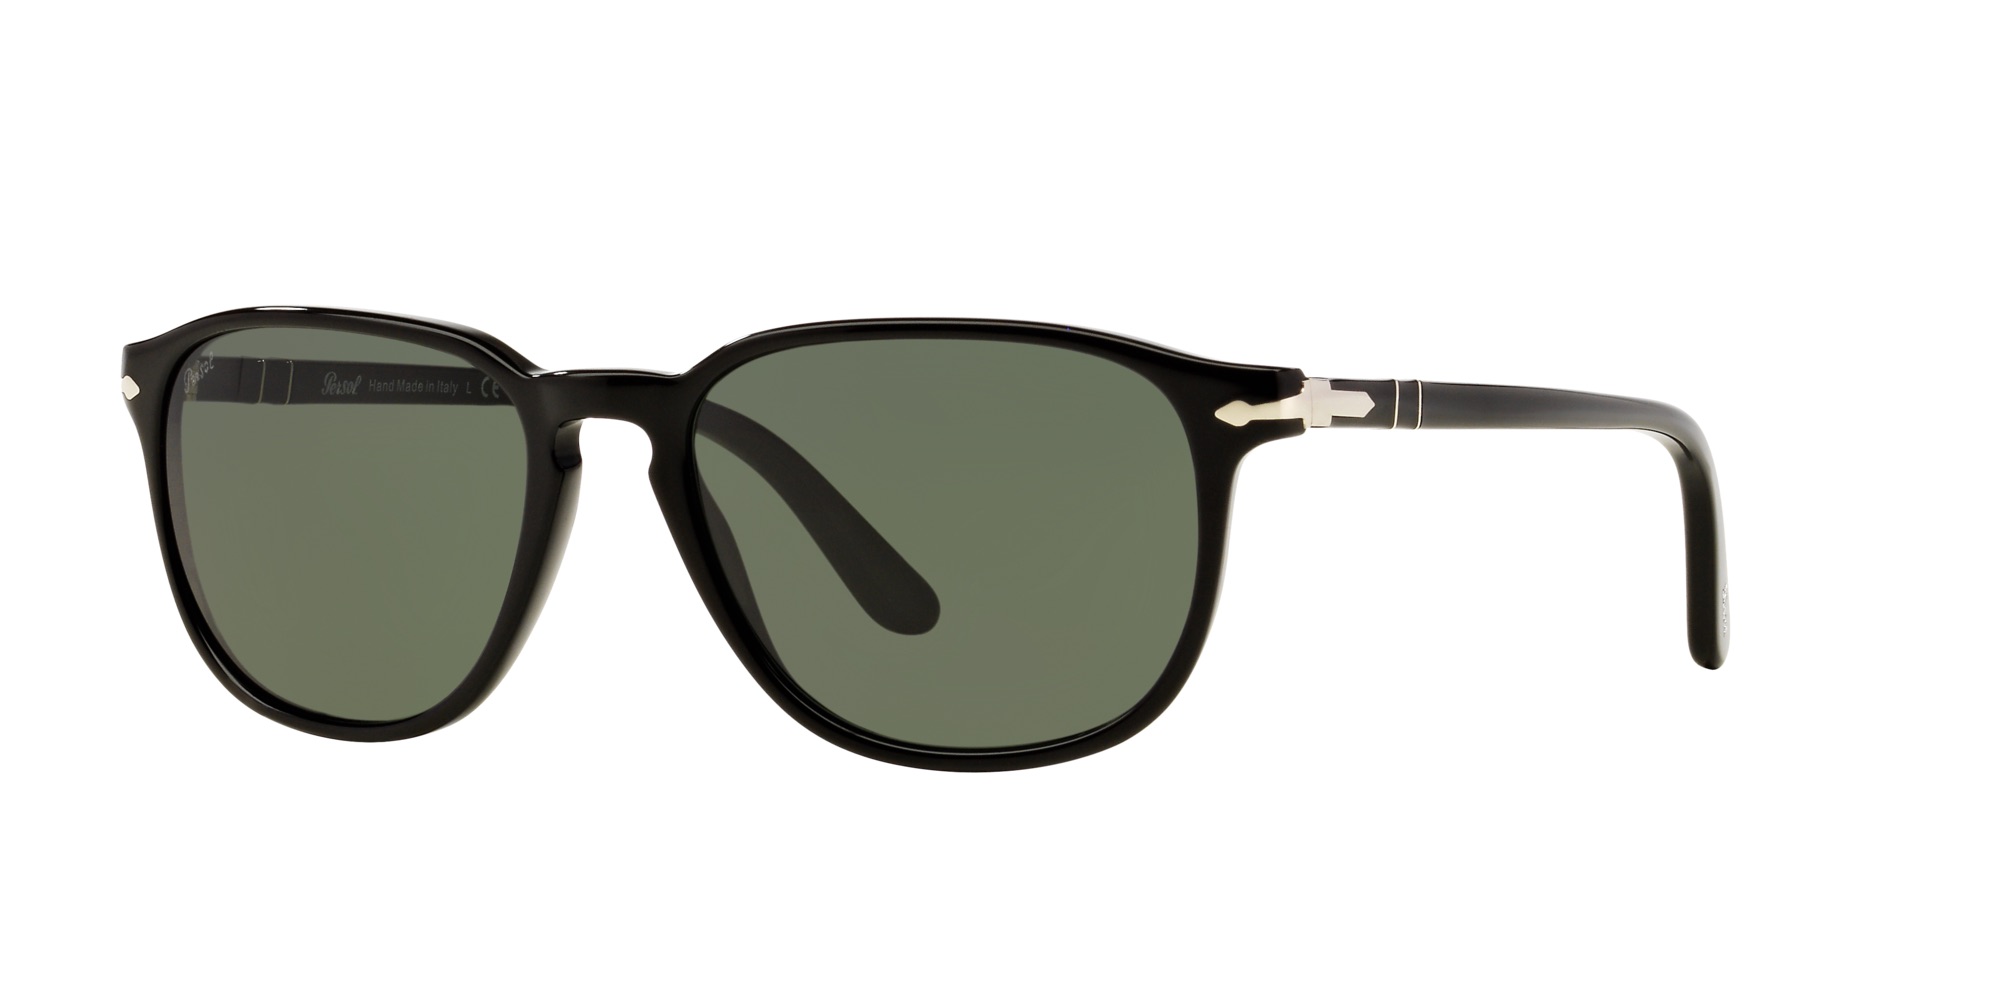 Persol Men's Sunglasses - Black/Green